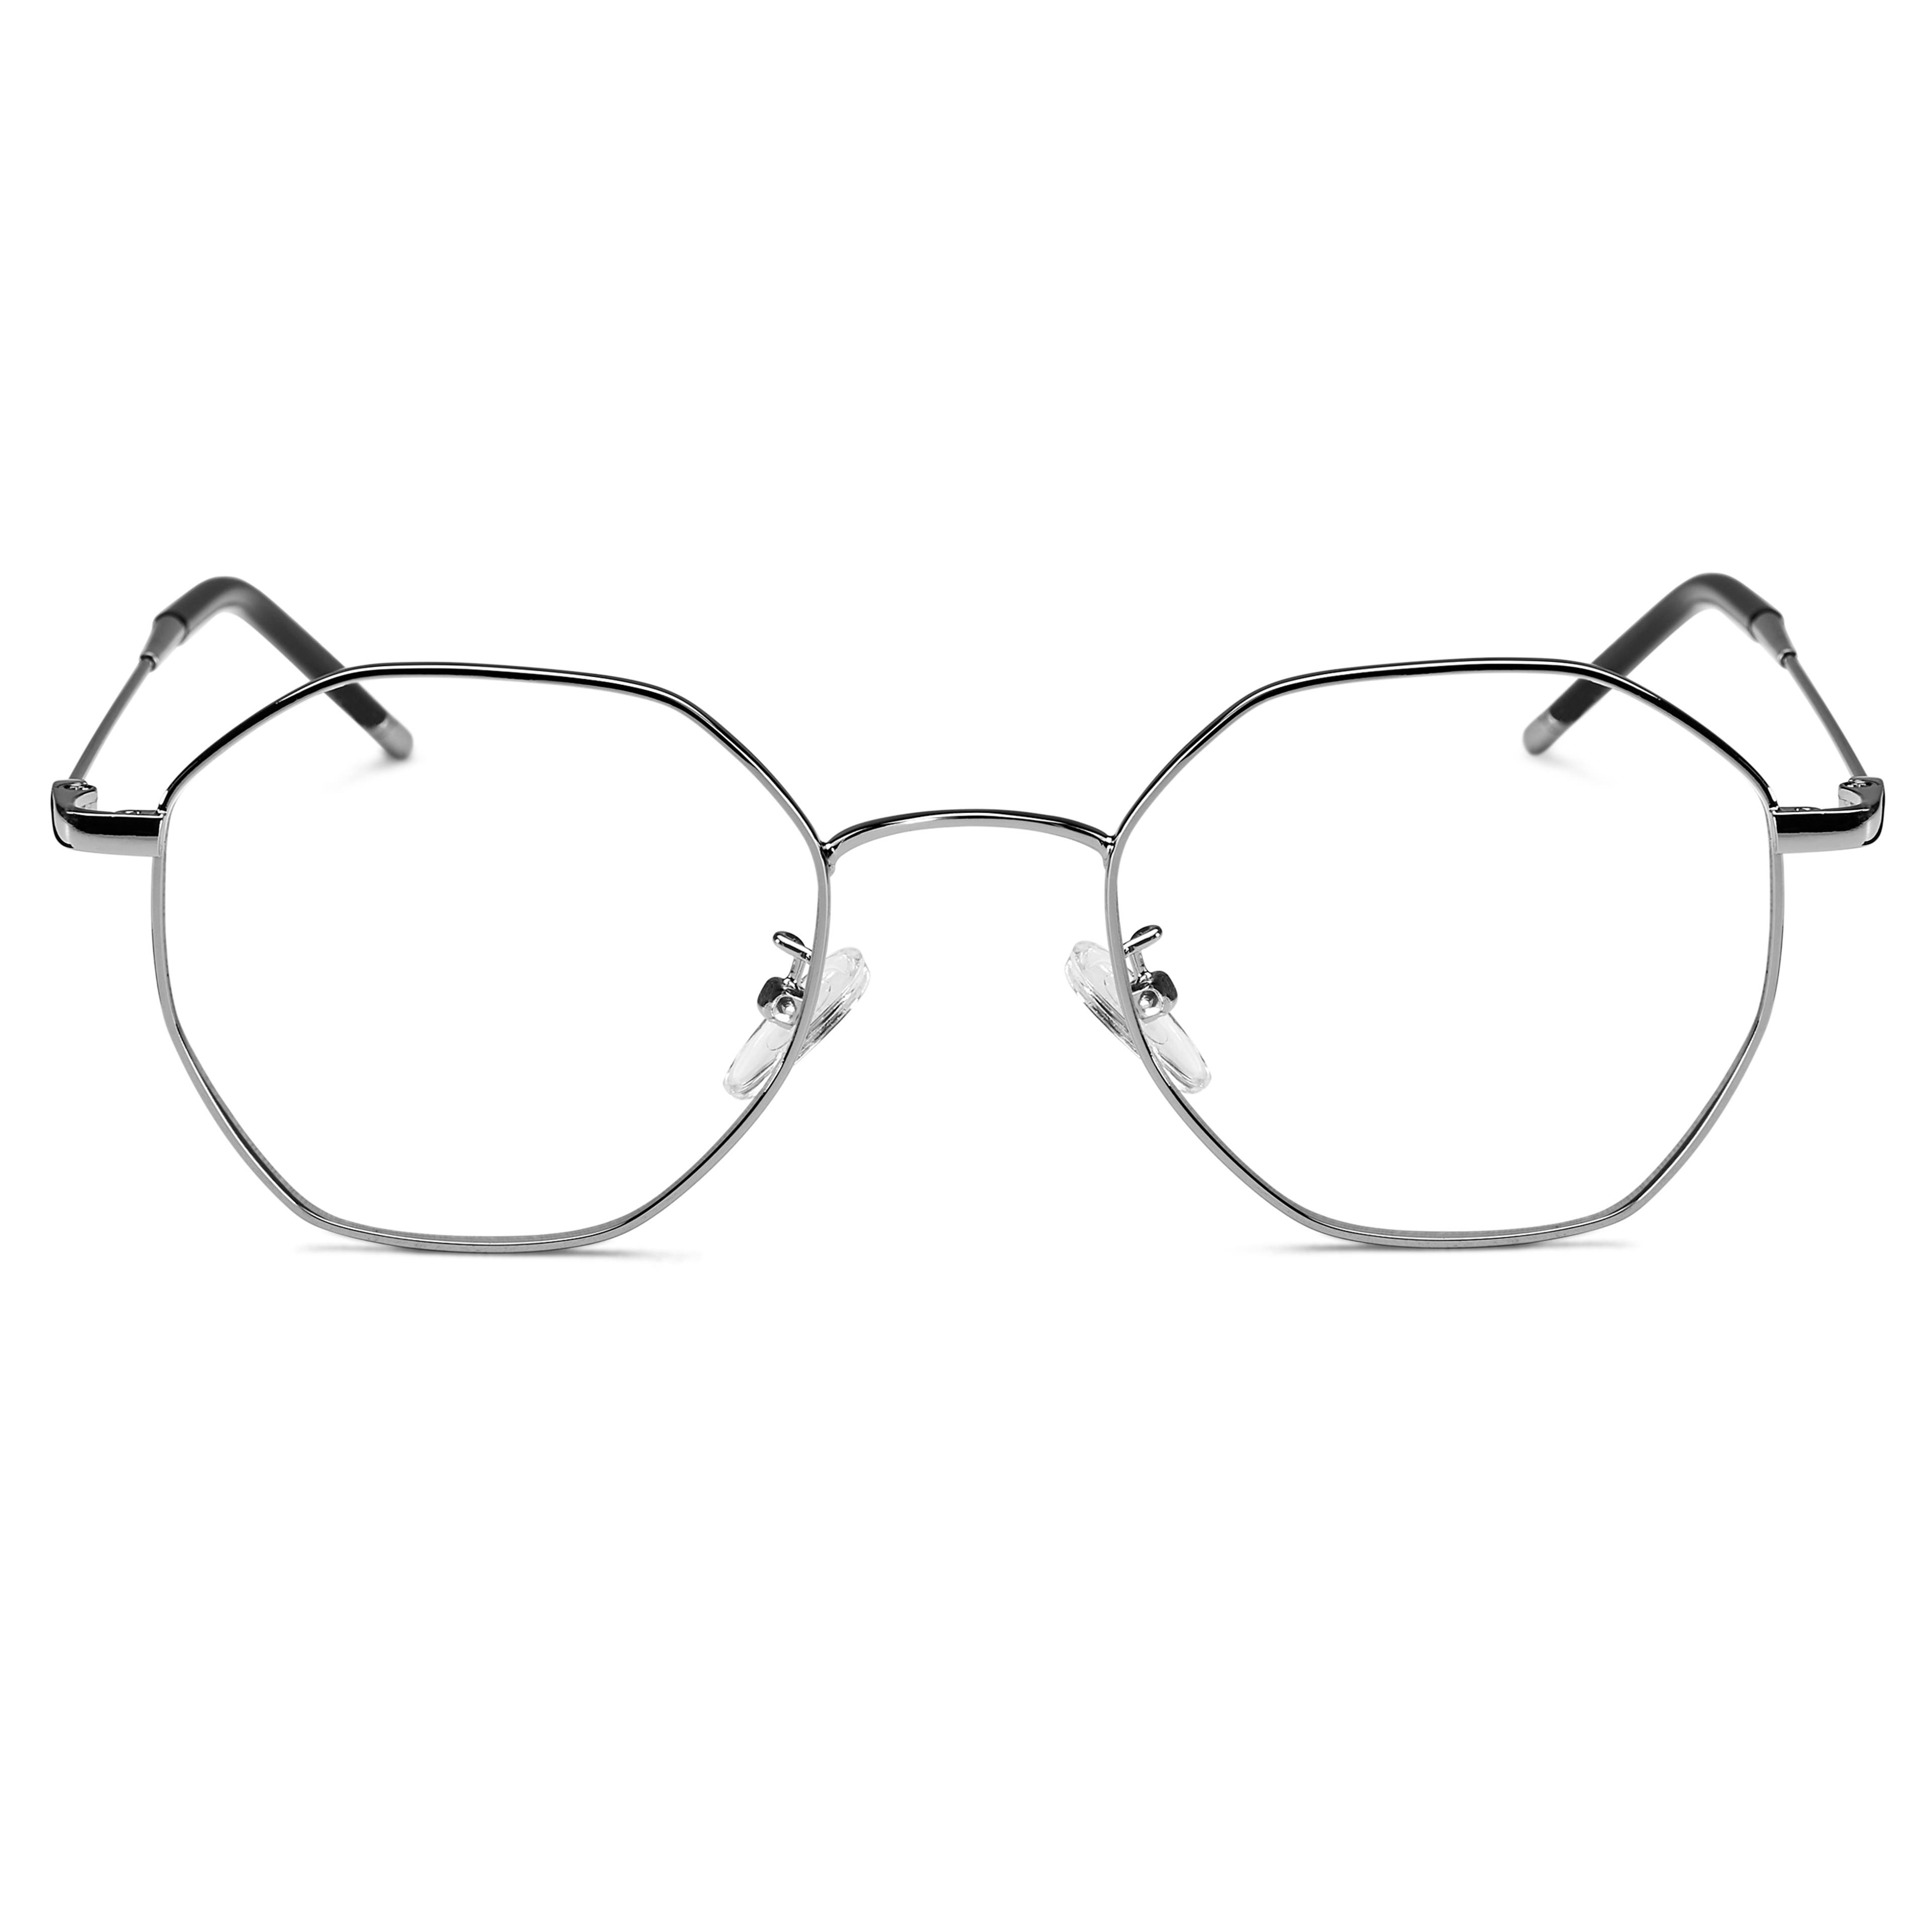 Executive Silver-Tone Geometric Frame Clear Lens Glasses